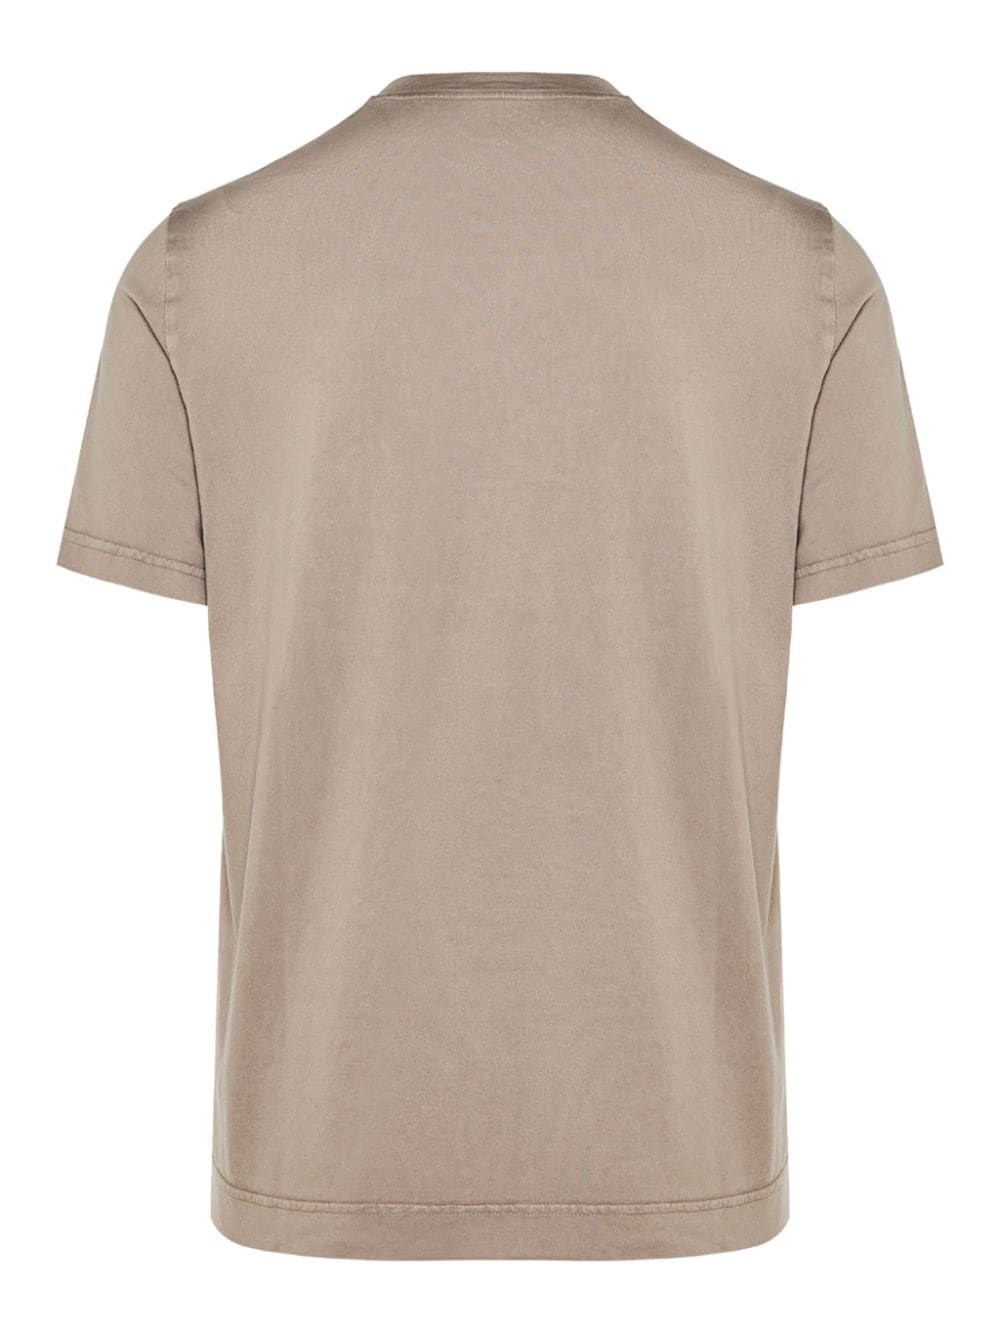 Fedeli Extreme cotton T-shirt - Beige